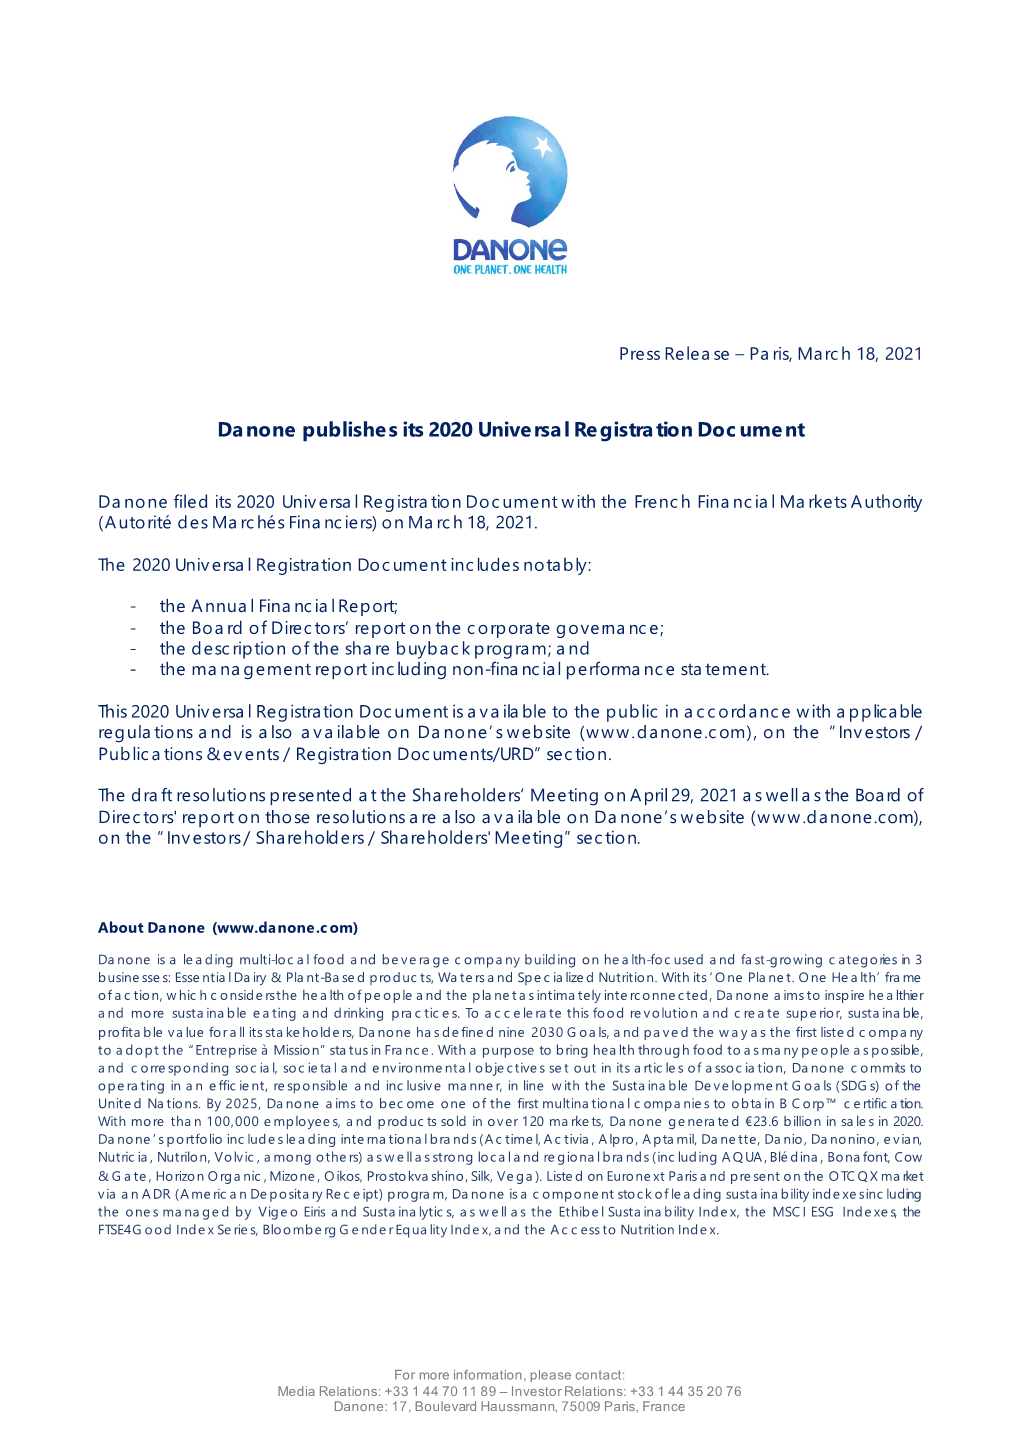 Danone Publishes Its 2020 Universal Registration Document